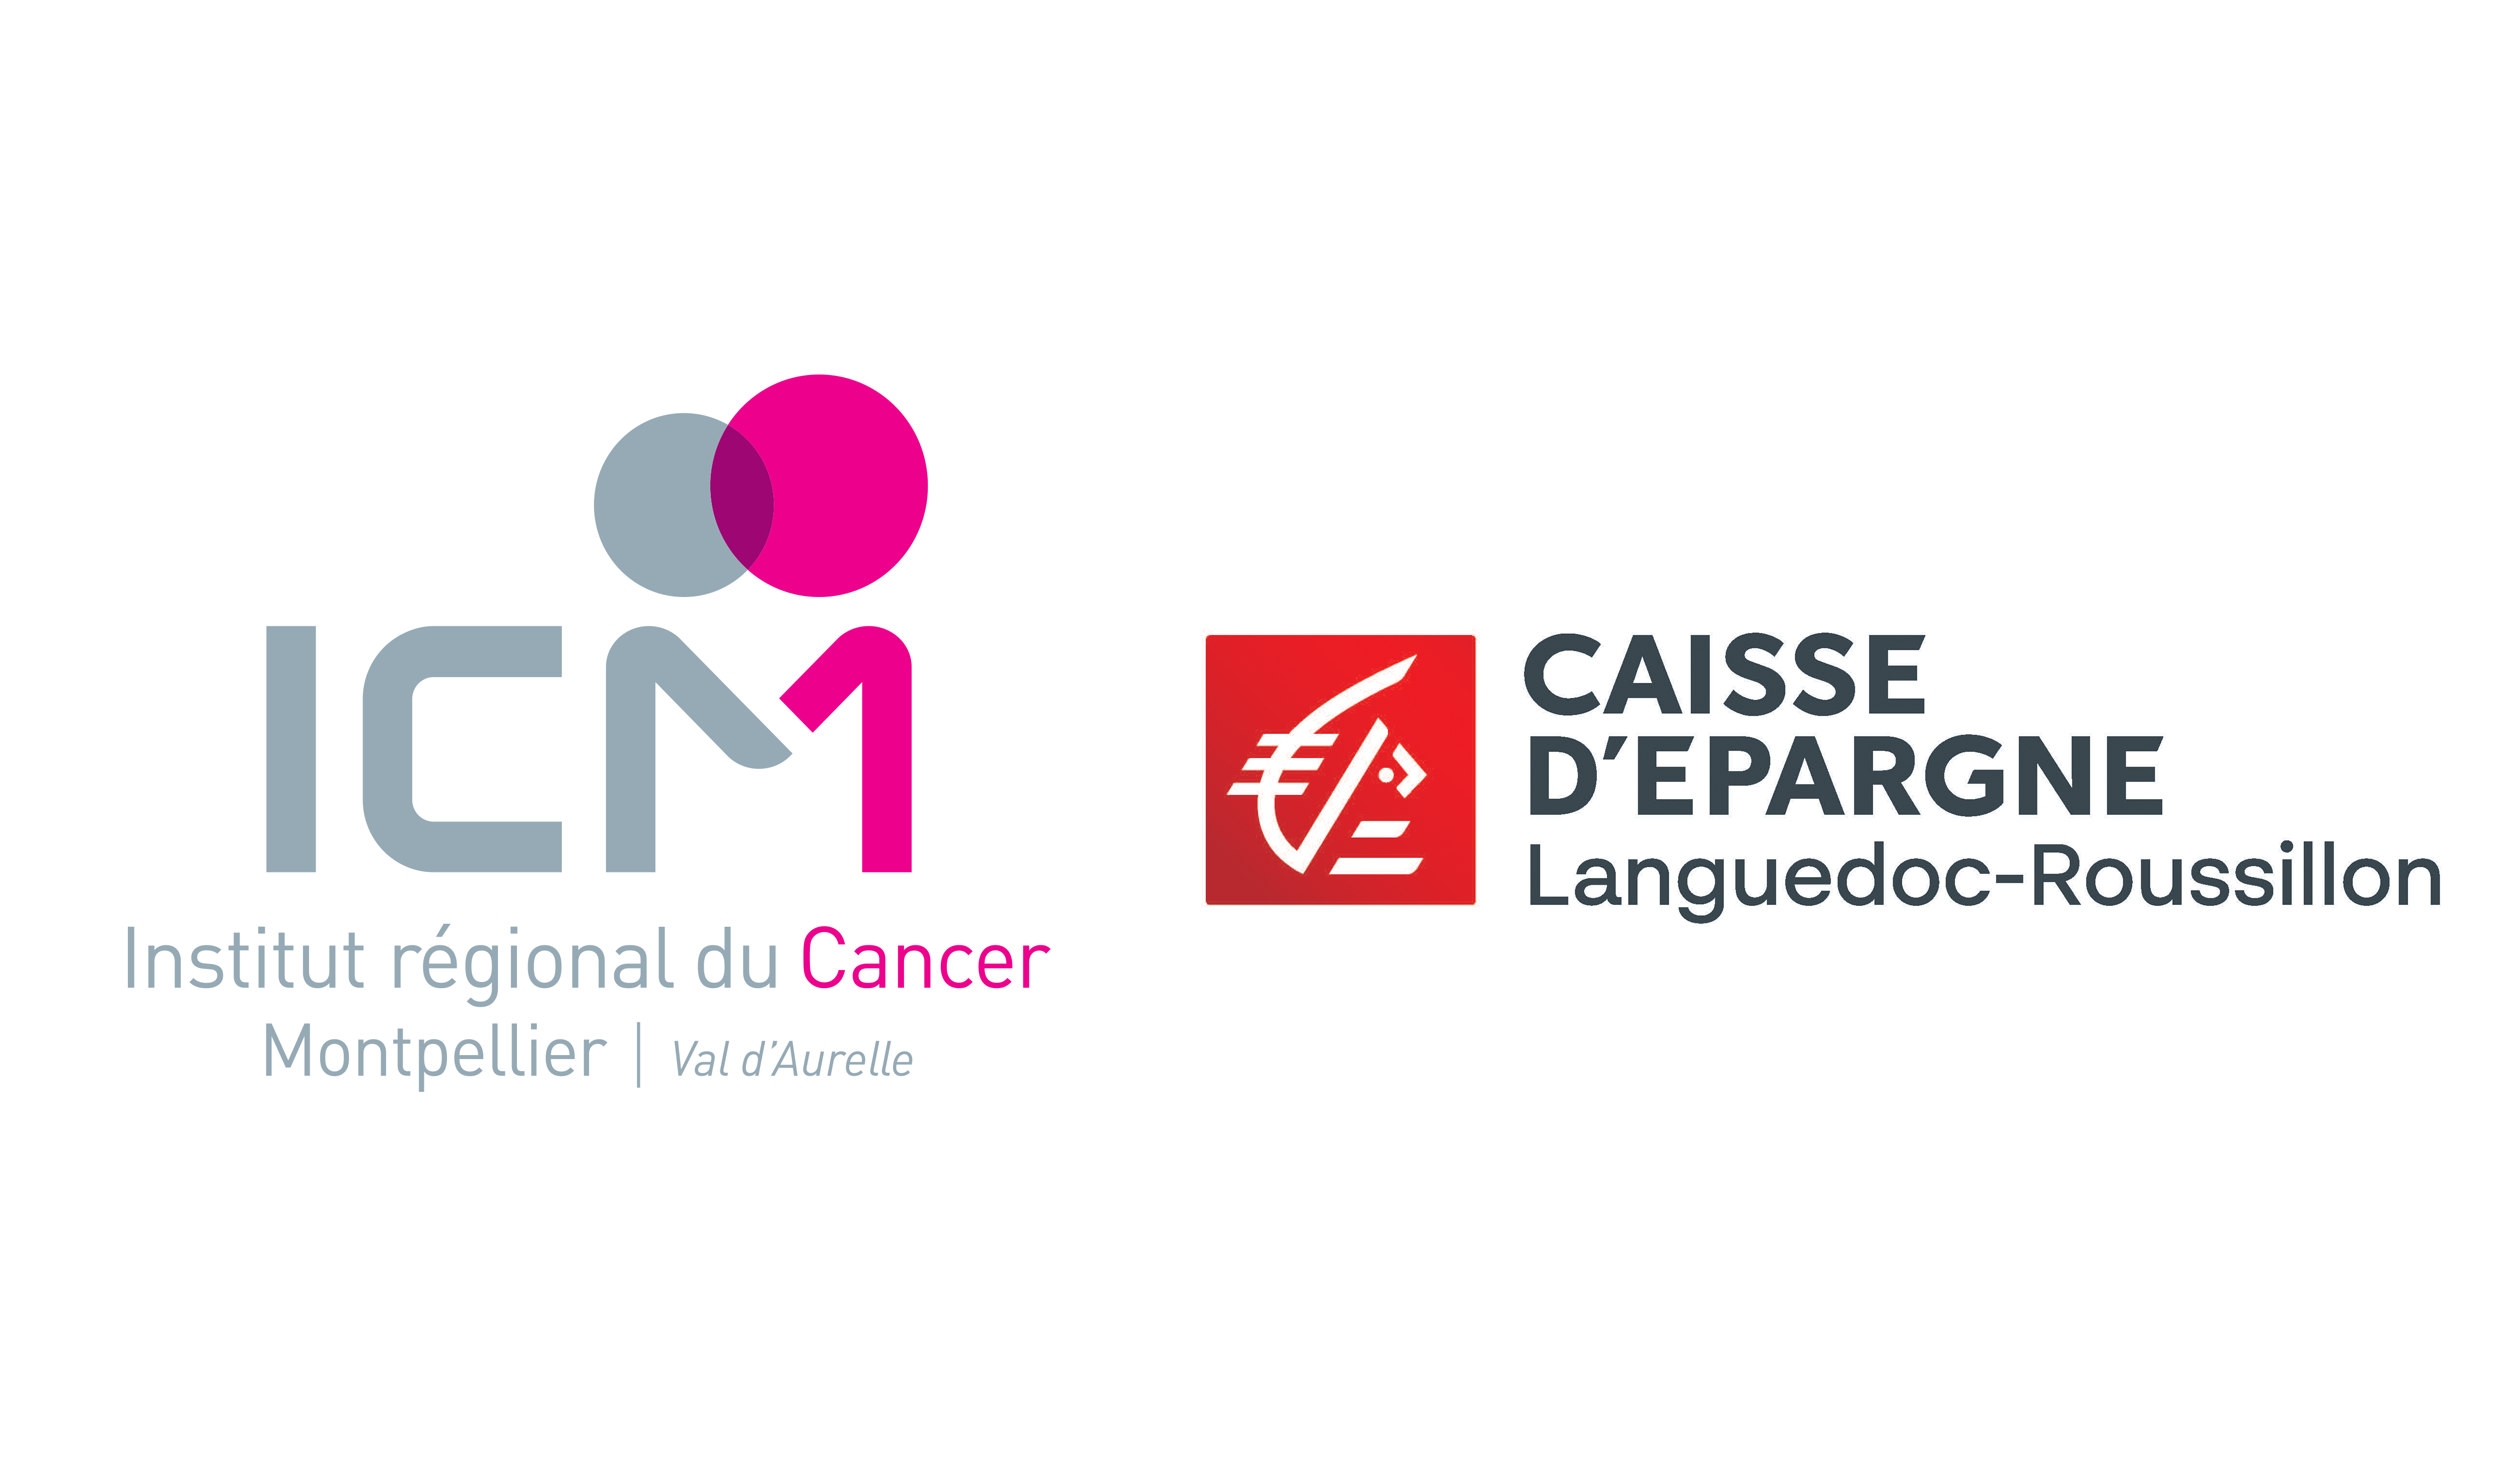 Institut du Cancer de Montpellier